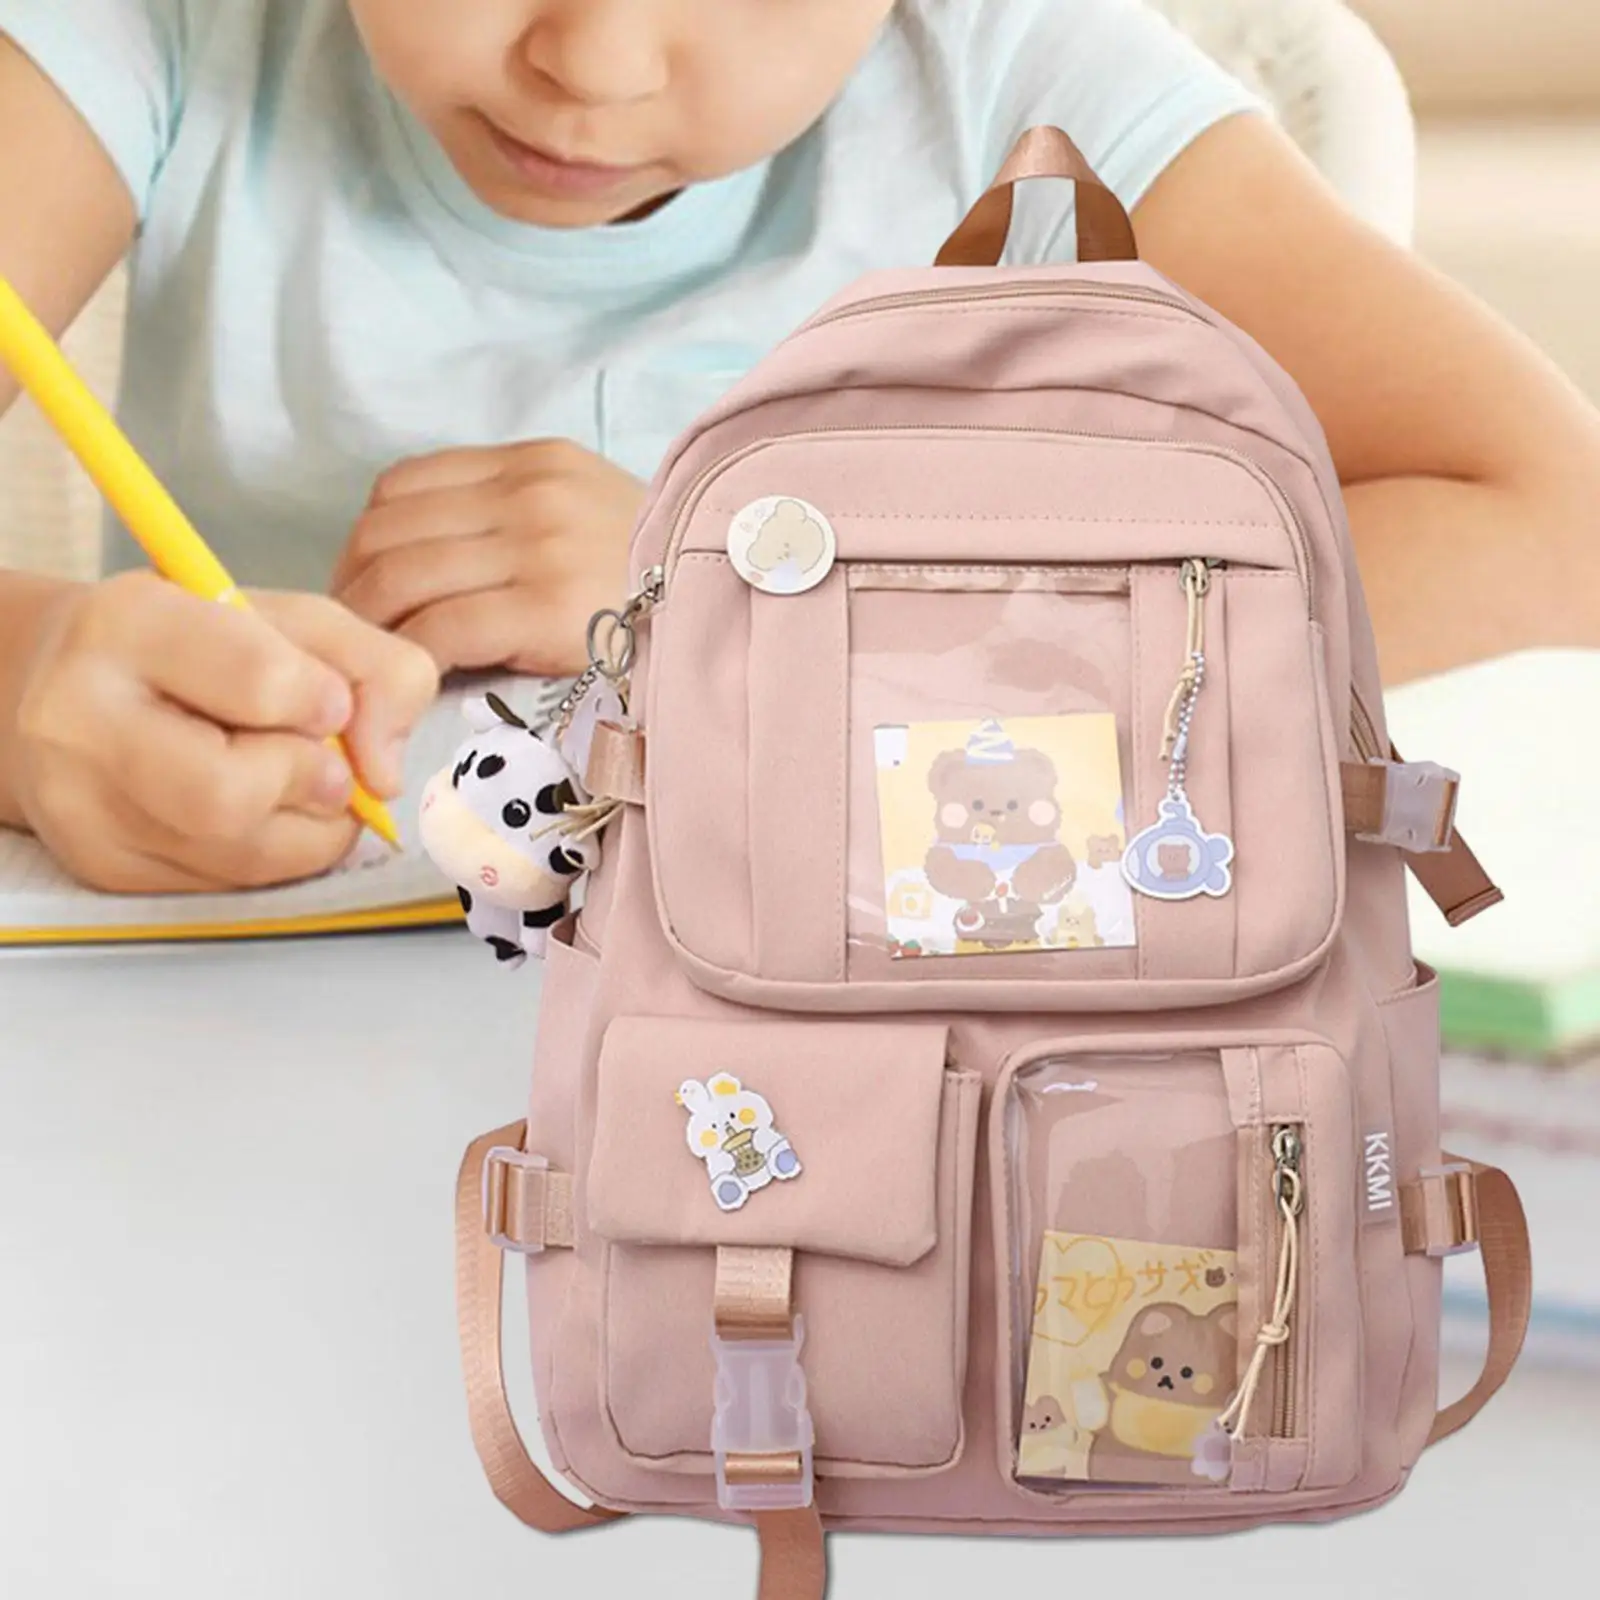 Women Backpack Side Pockets Casual Cartoon Laptop Daypacks School Bag Travel Book Bags for Girls Student Female Teens Children